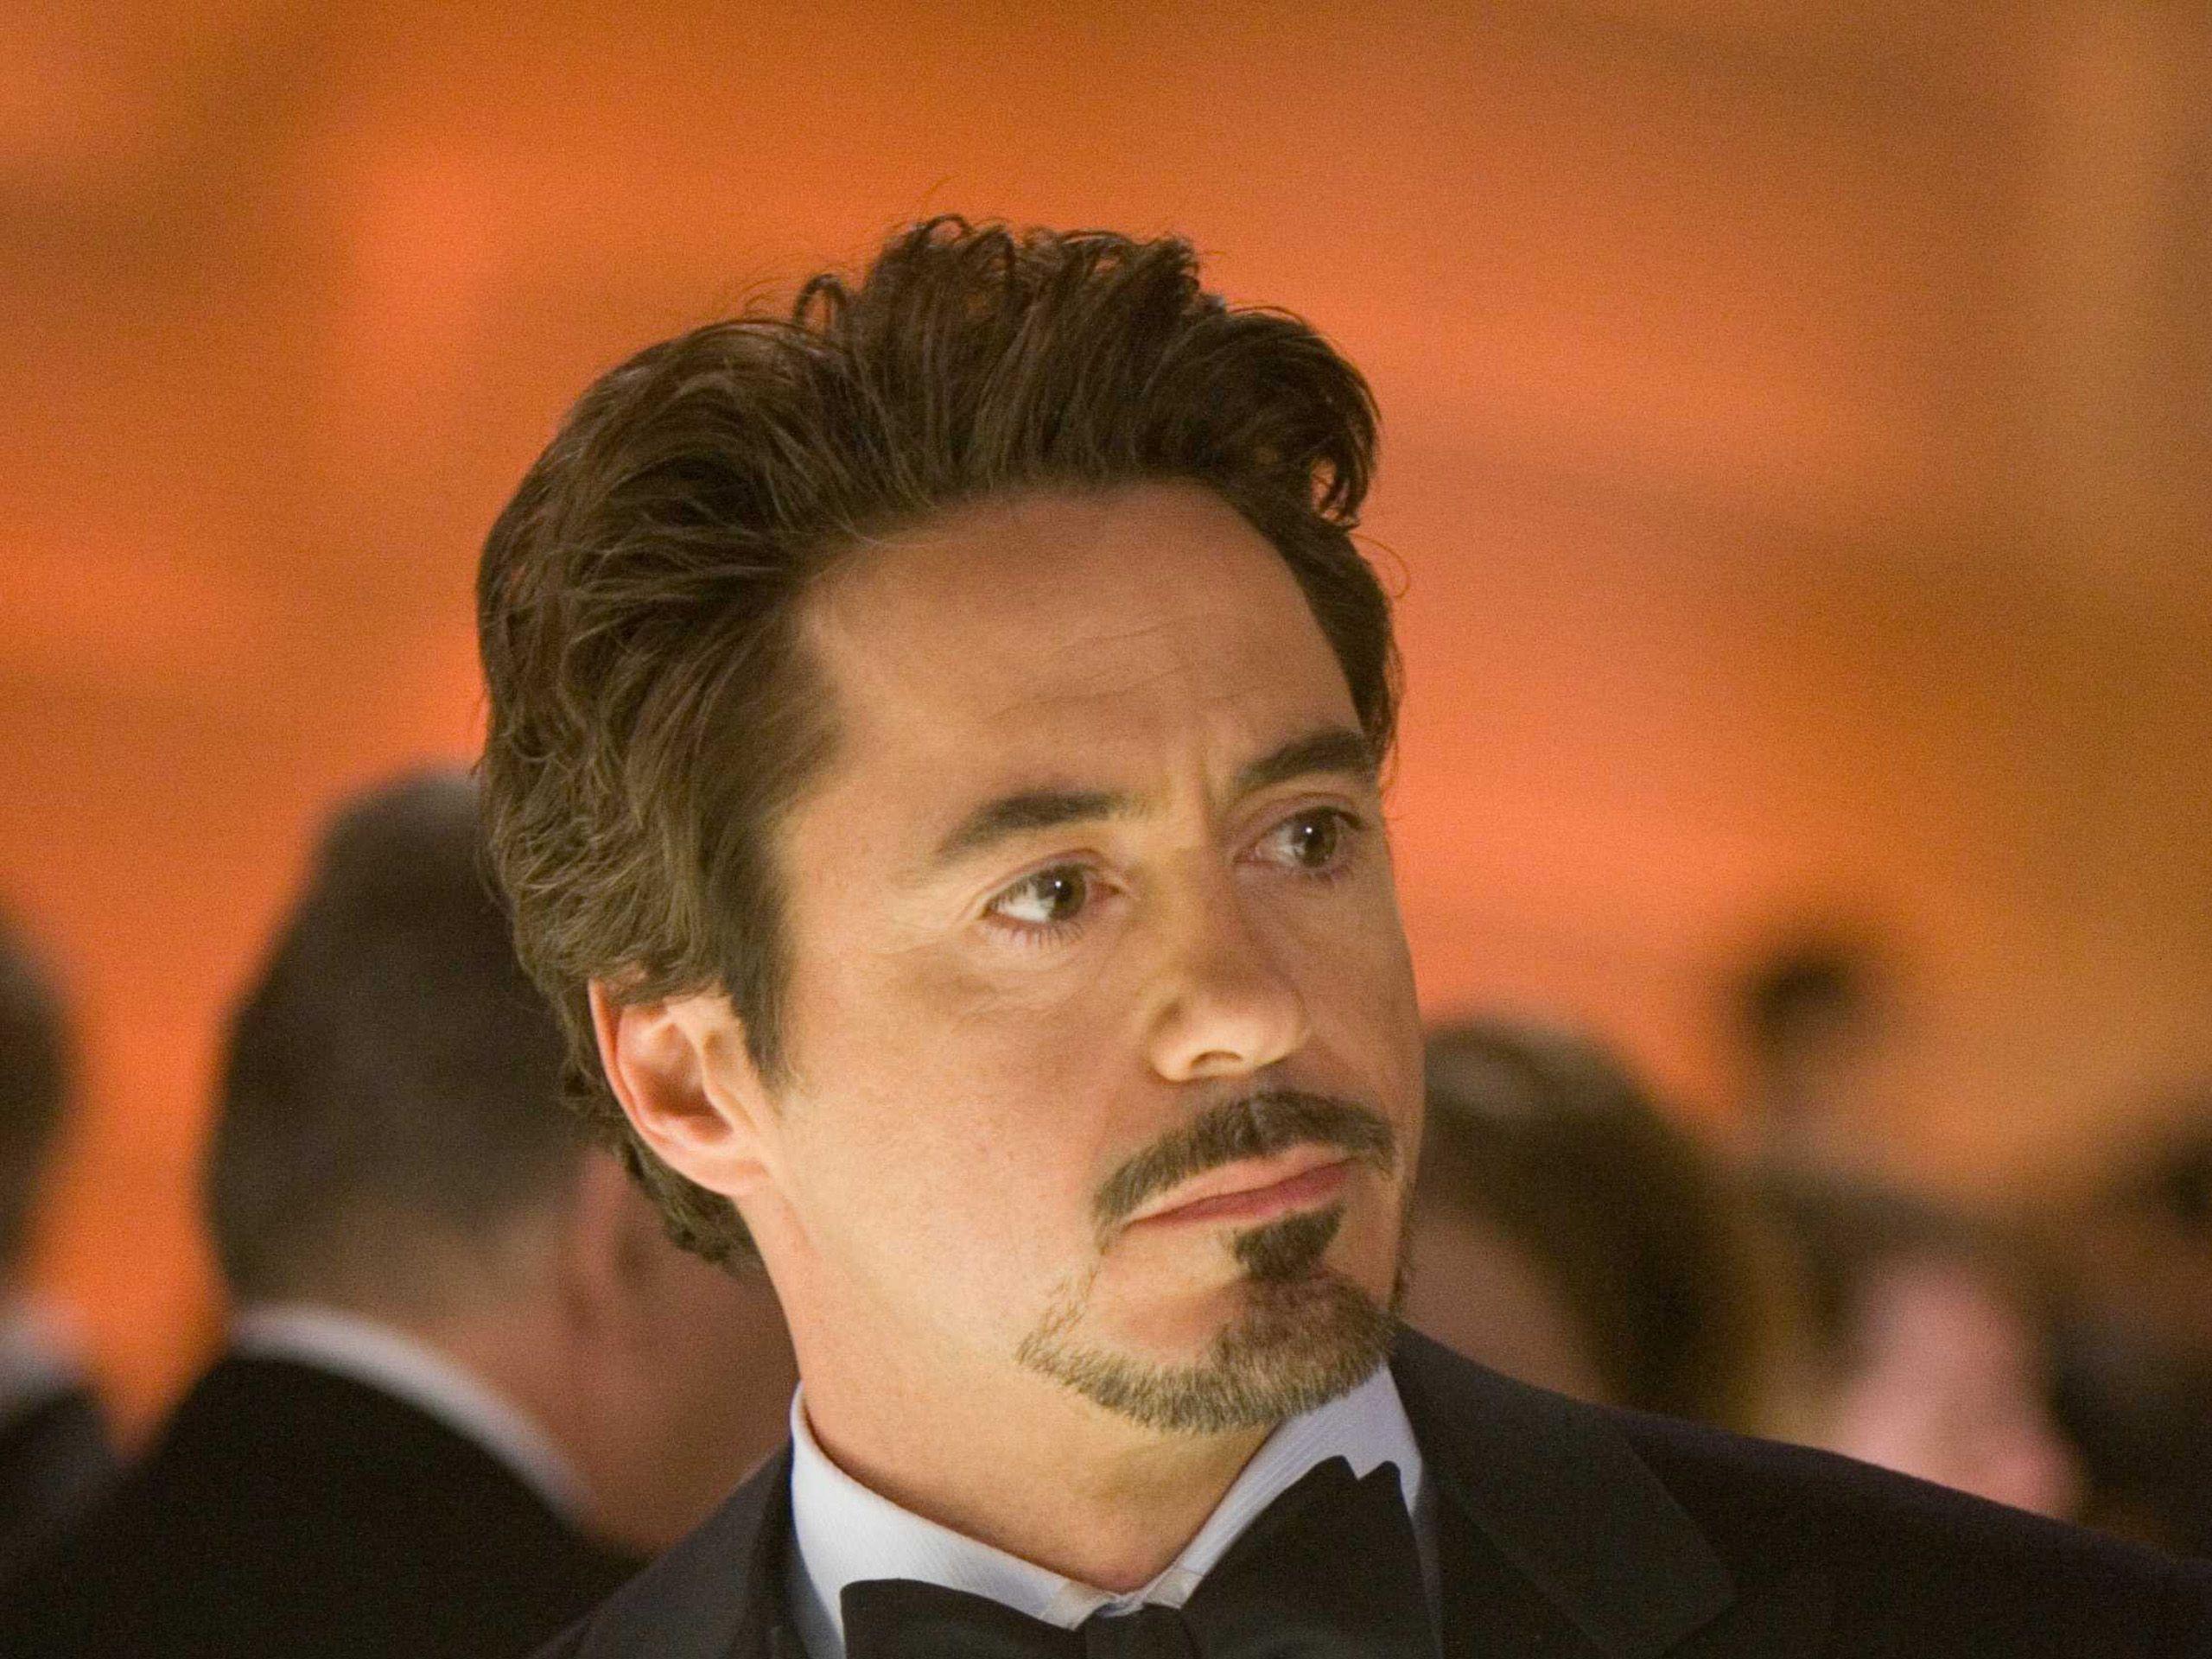 Robert Downey Jr Image 6 HD Wallpaper. lzamgs